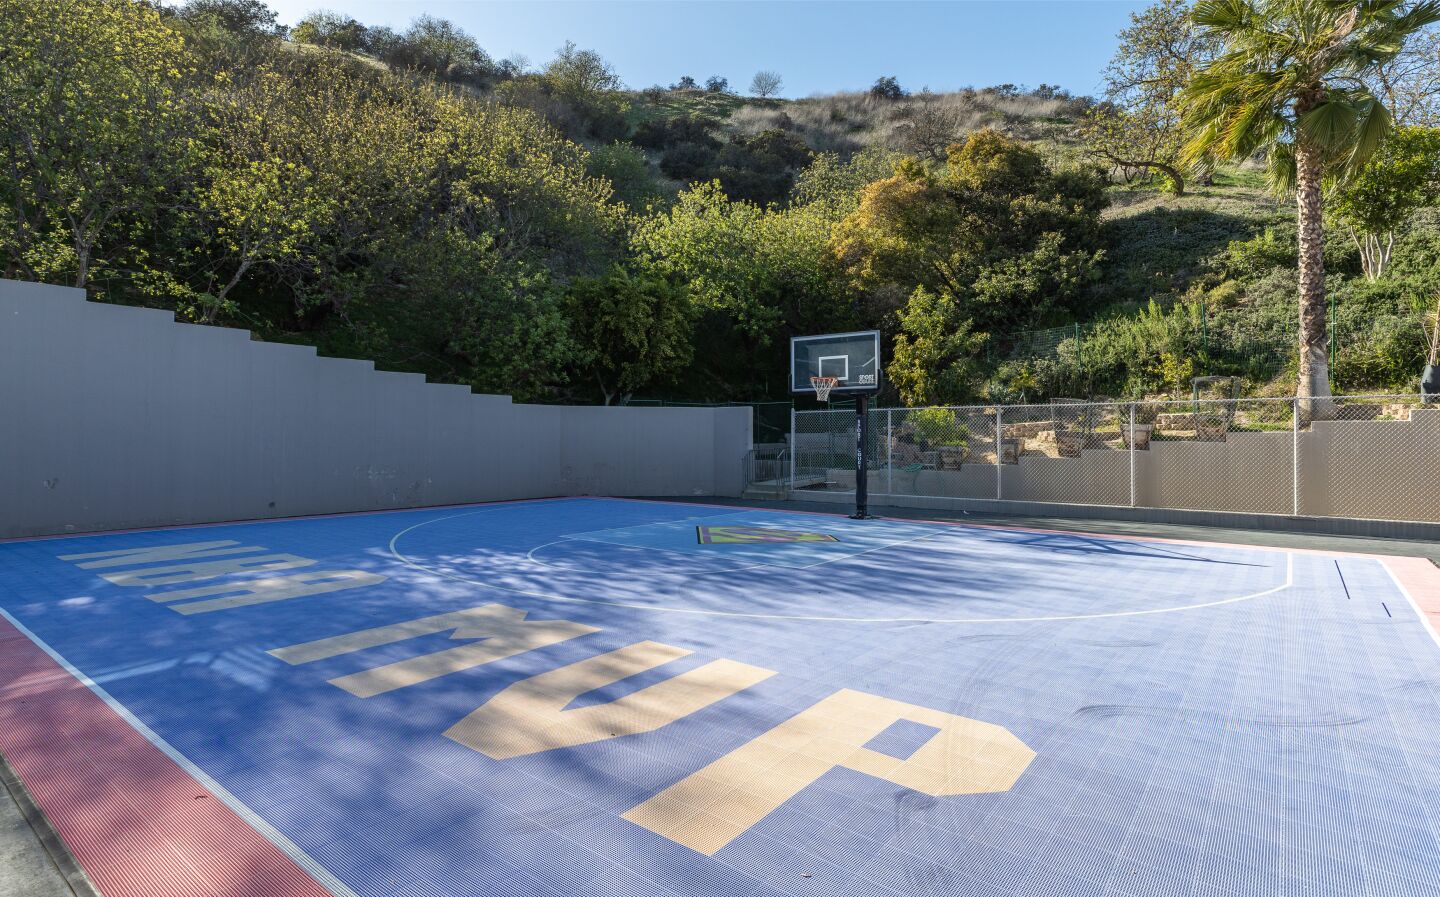 The custom basketball court.